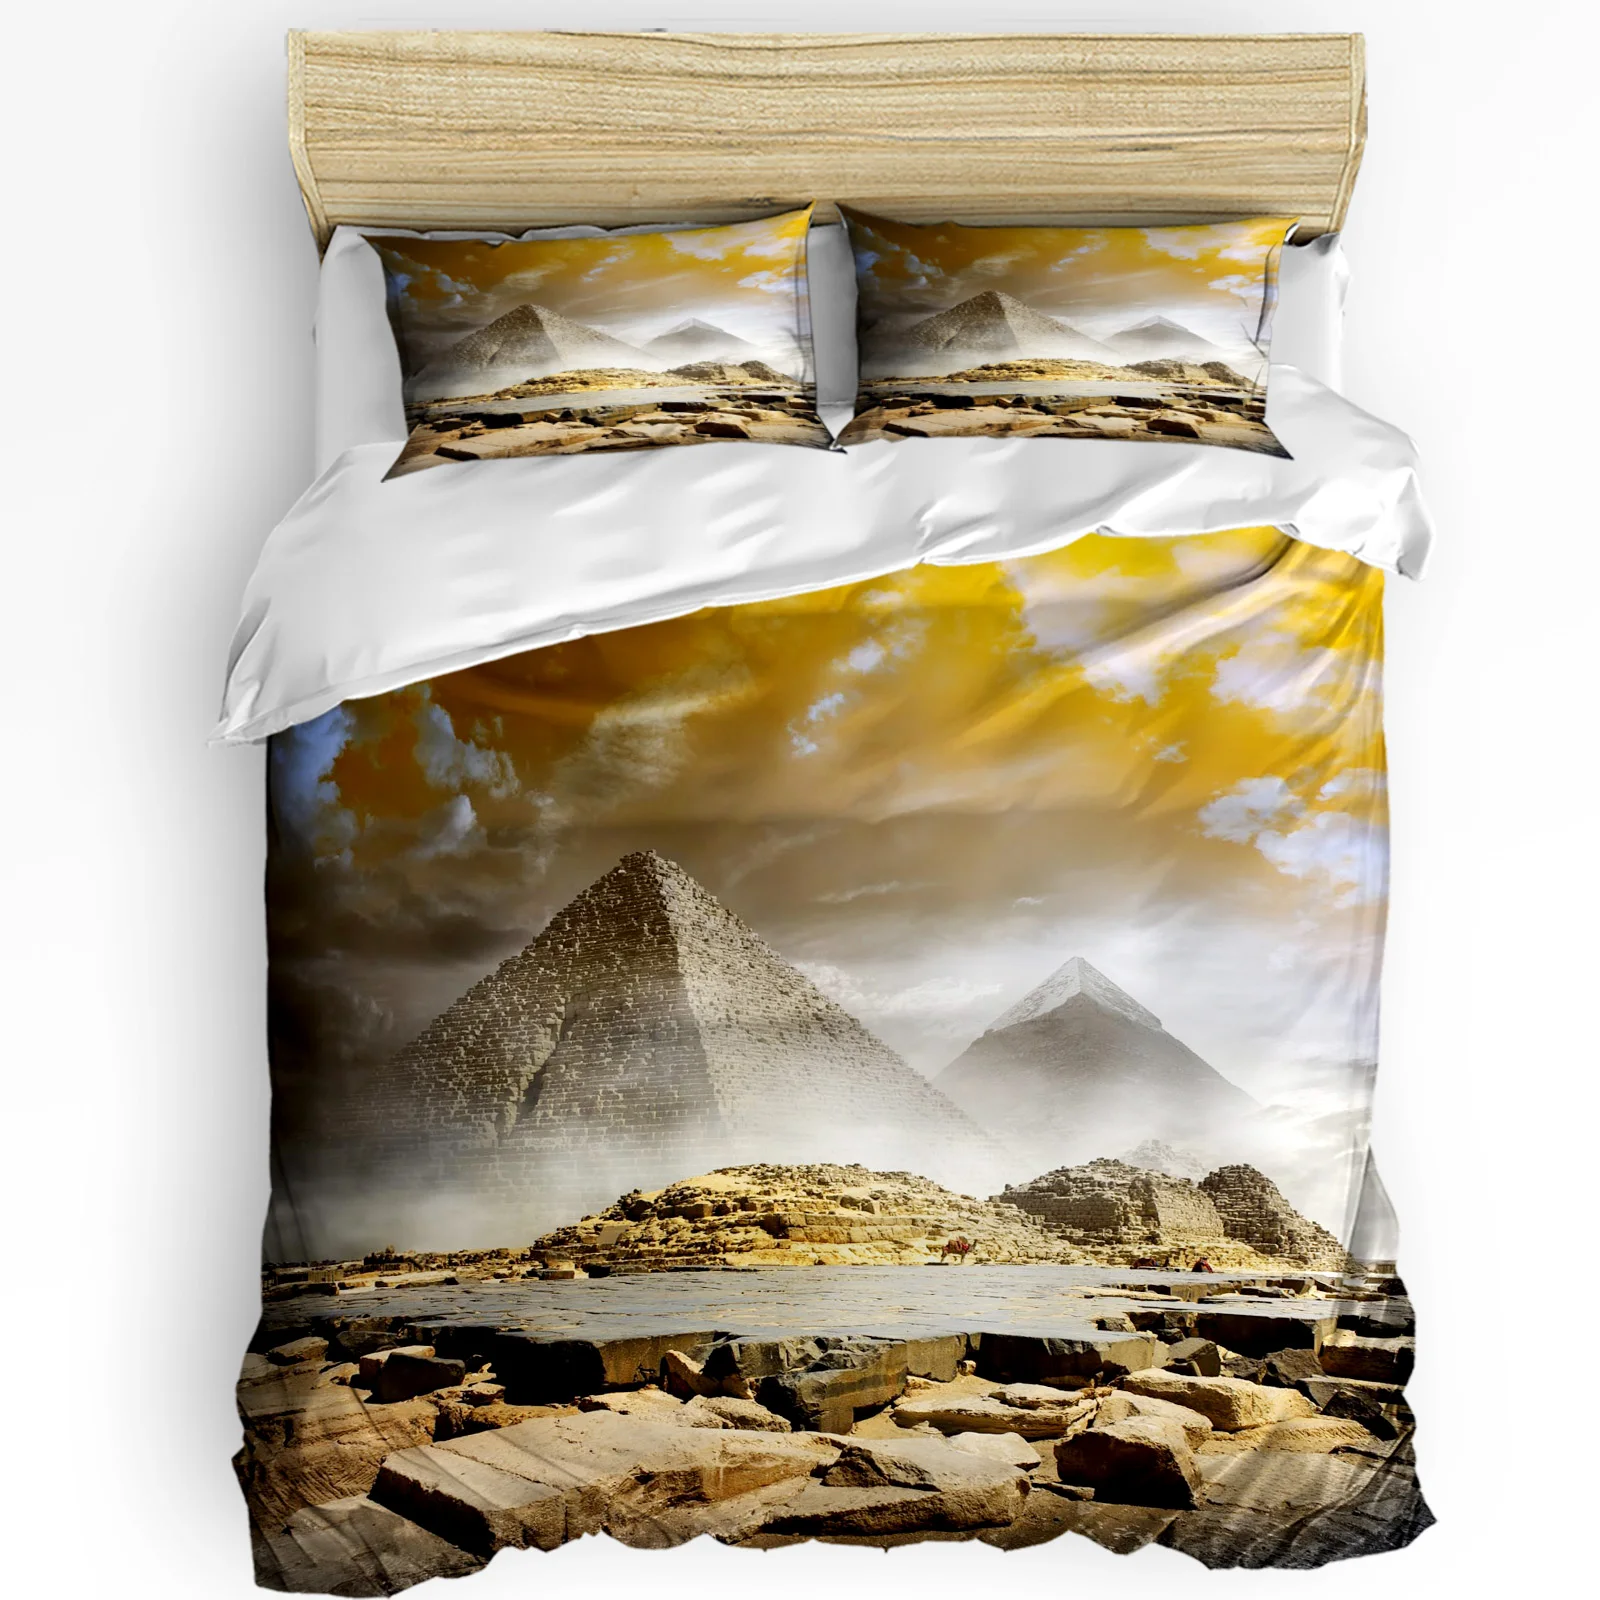 

Egypt Pyramid Smog Printed Comfort Duvet Cover Pillow Case Home Textile Quilt Cover Boy Kid Teen Girl Luxury 3pcs Bedding Set